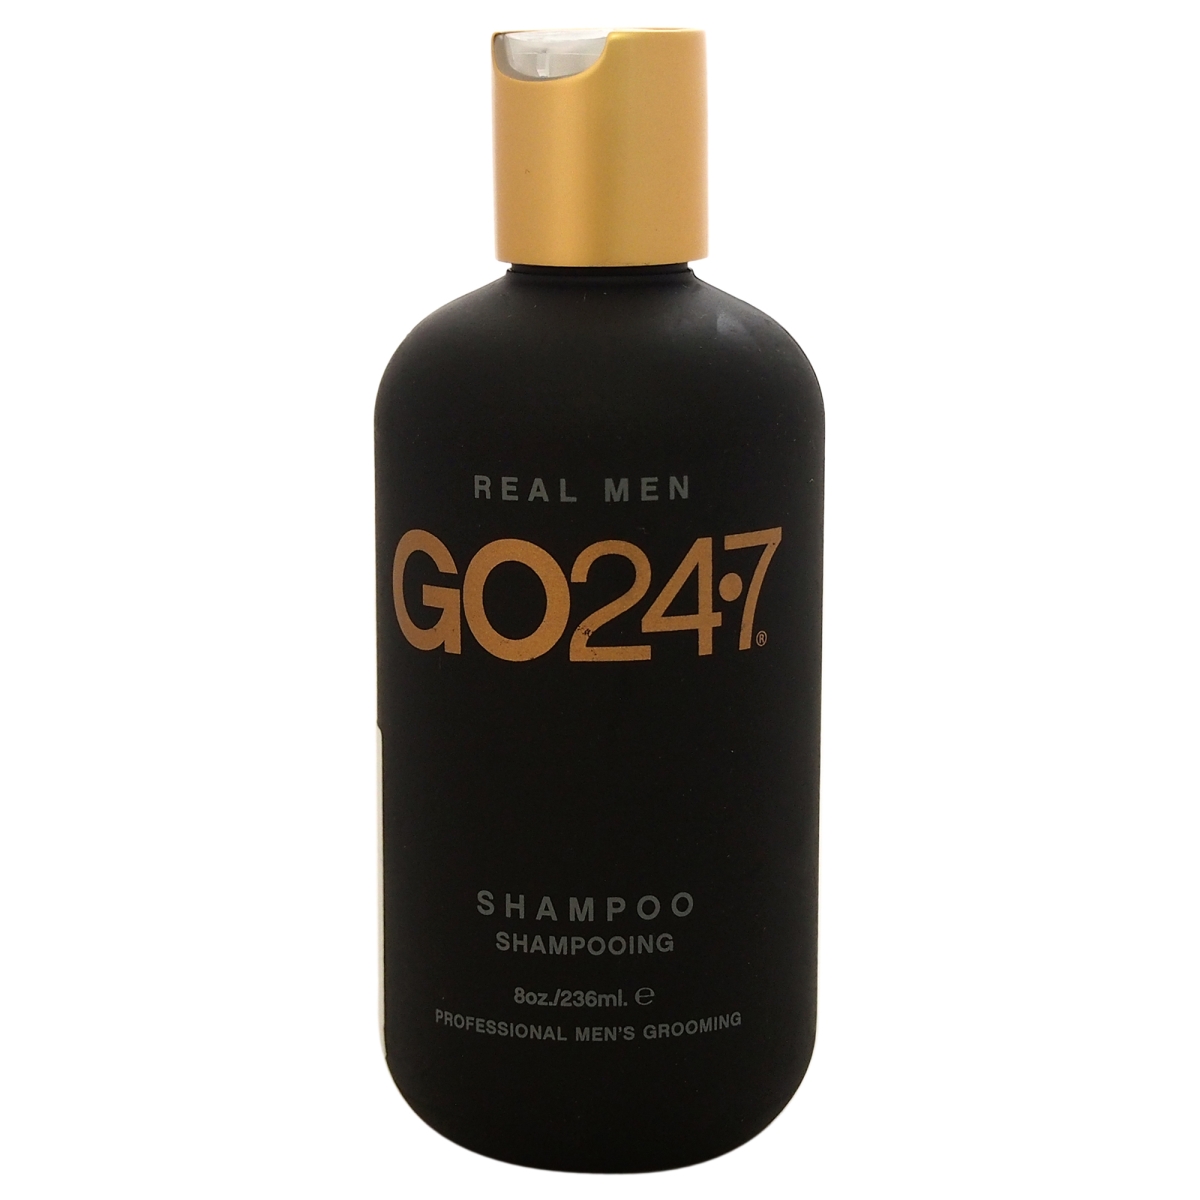 M-hc-1266 8 Oz Real Men Shampoo For Men